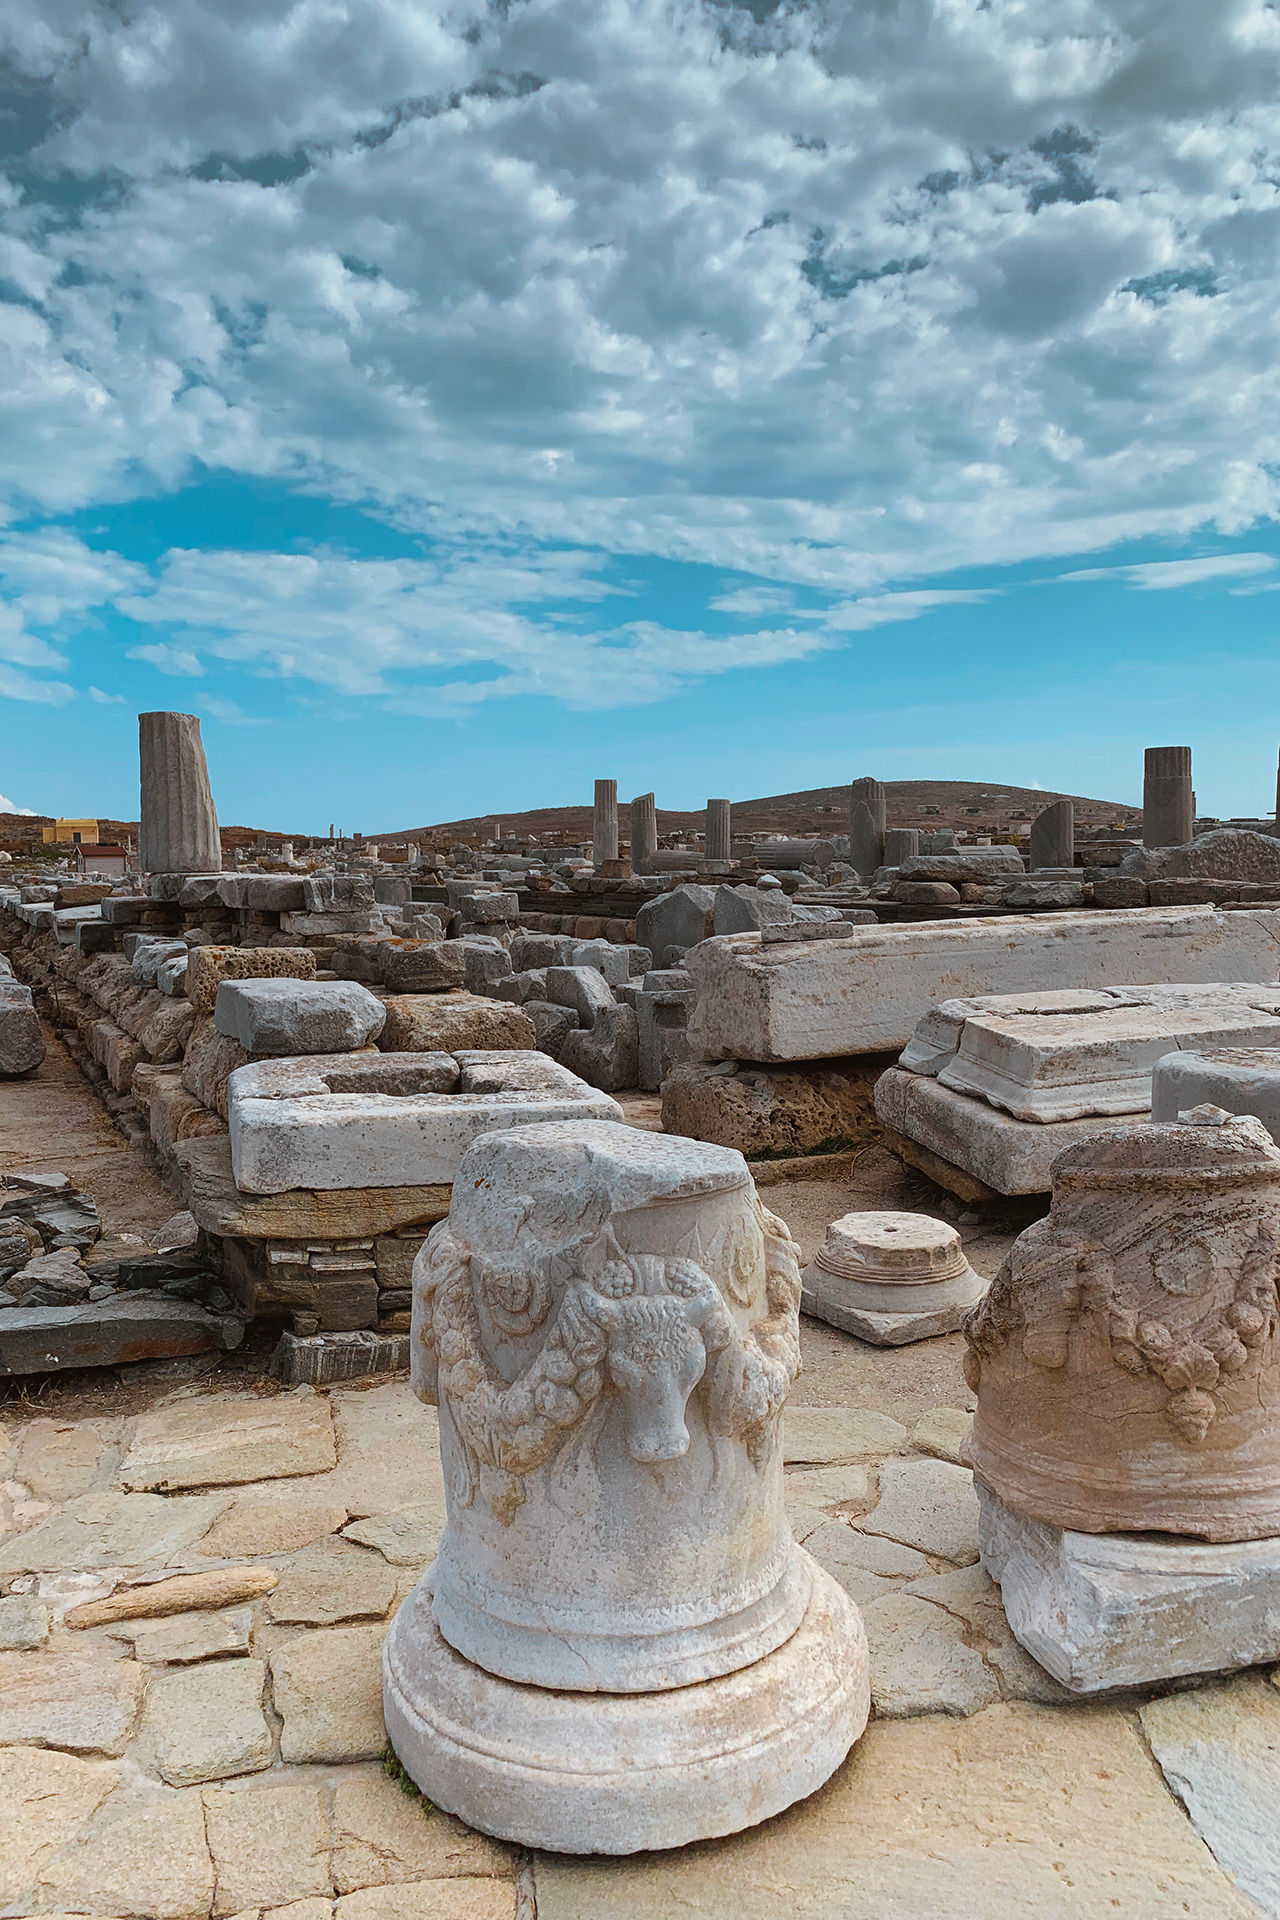 Agora represents the daily life on Delos